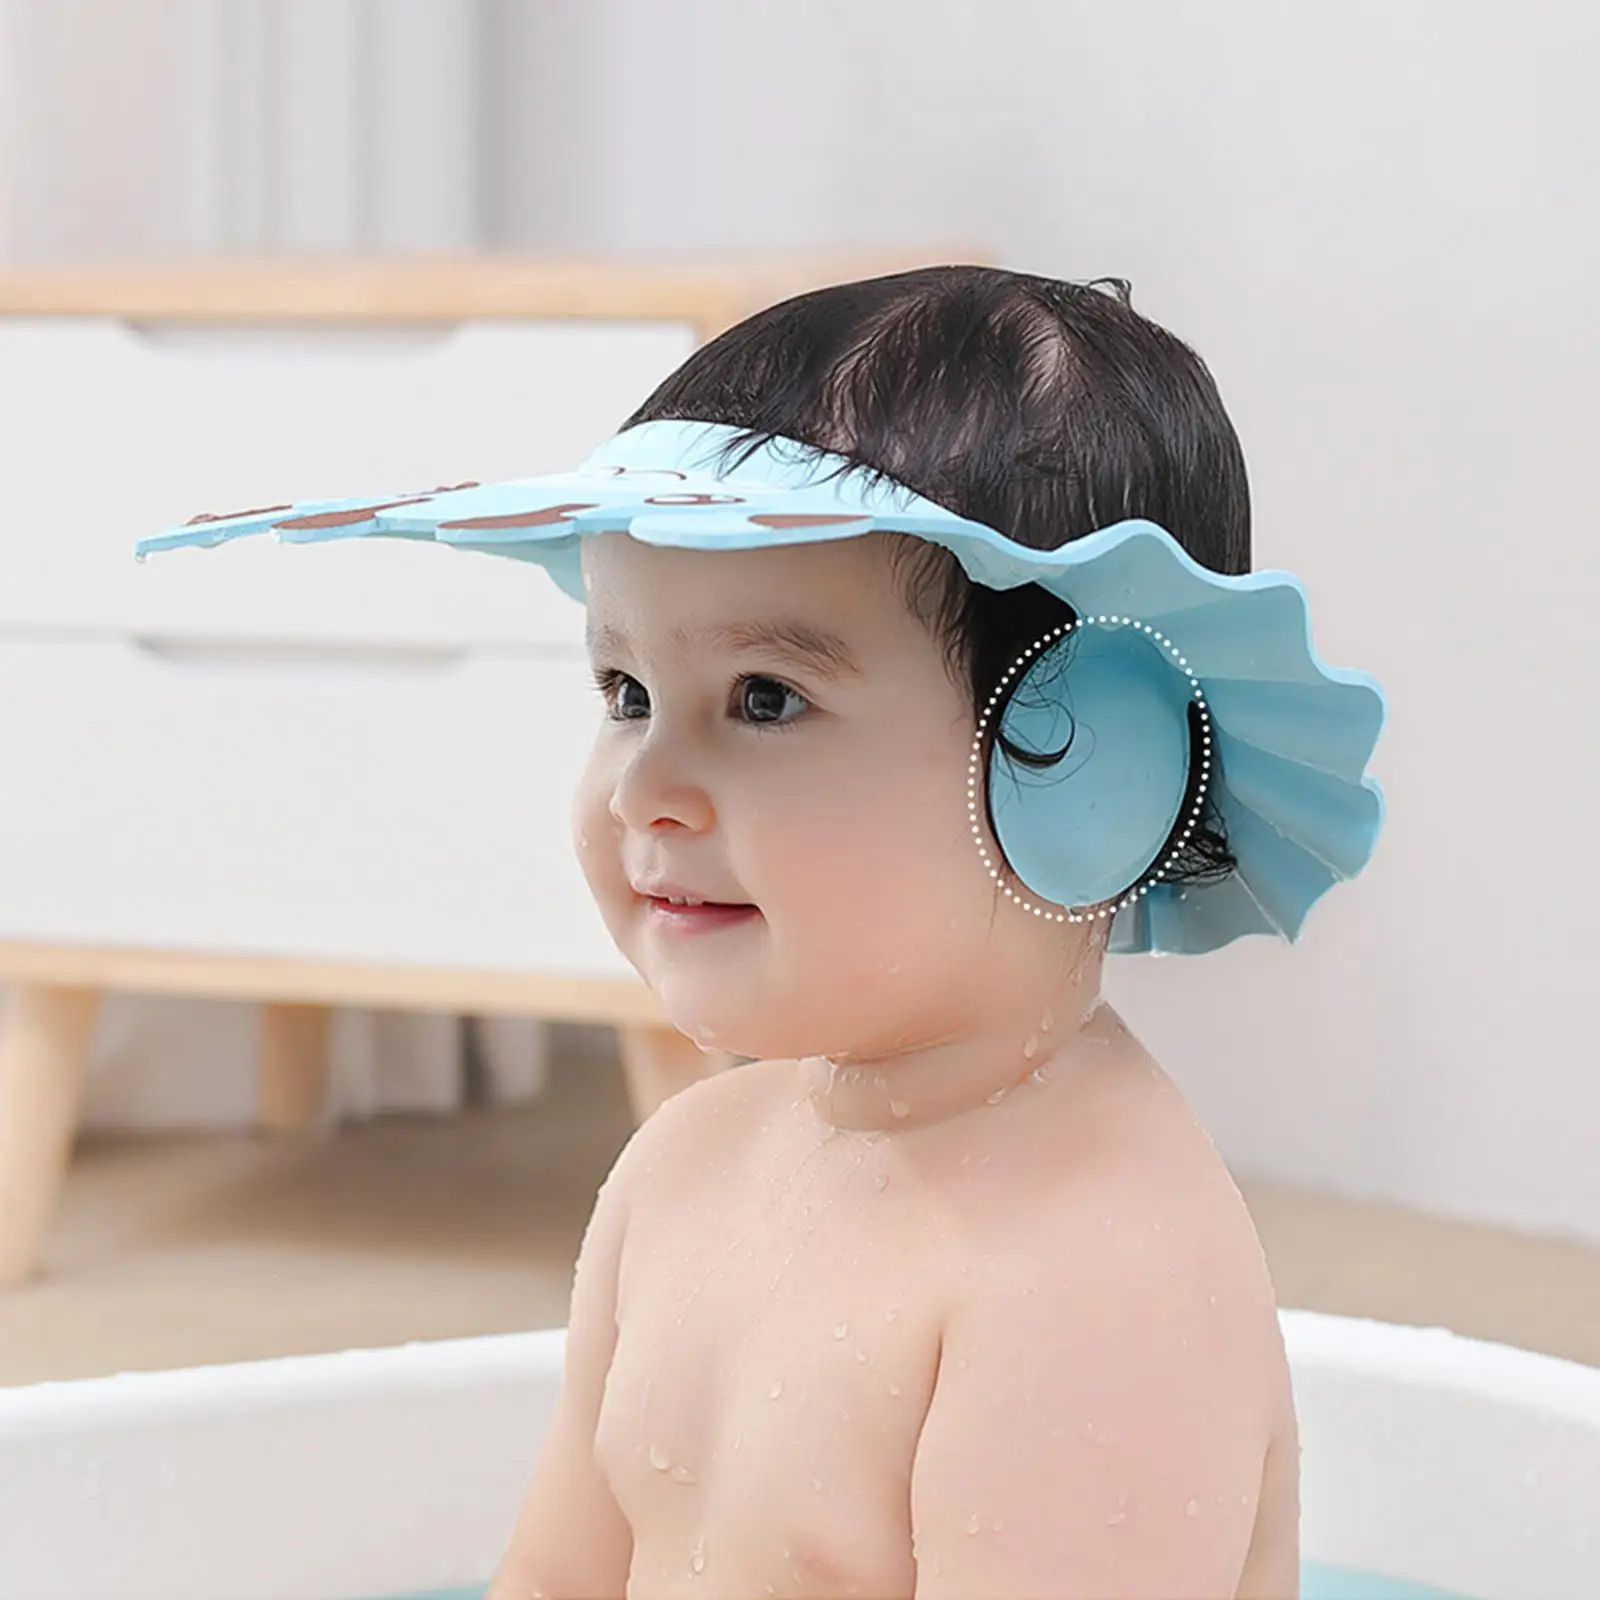  Shampoo Shower Bathing  Bath CAPS Soft Adjustable Visor Hat for, Baby, Kids, Children